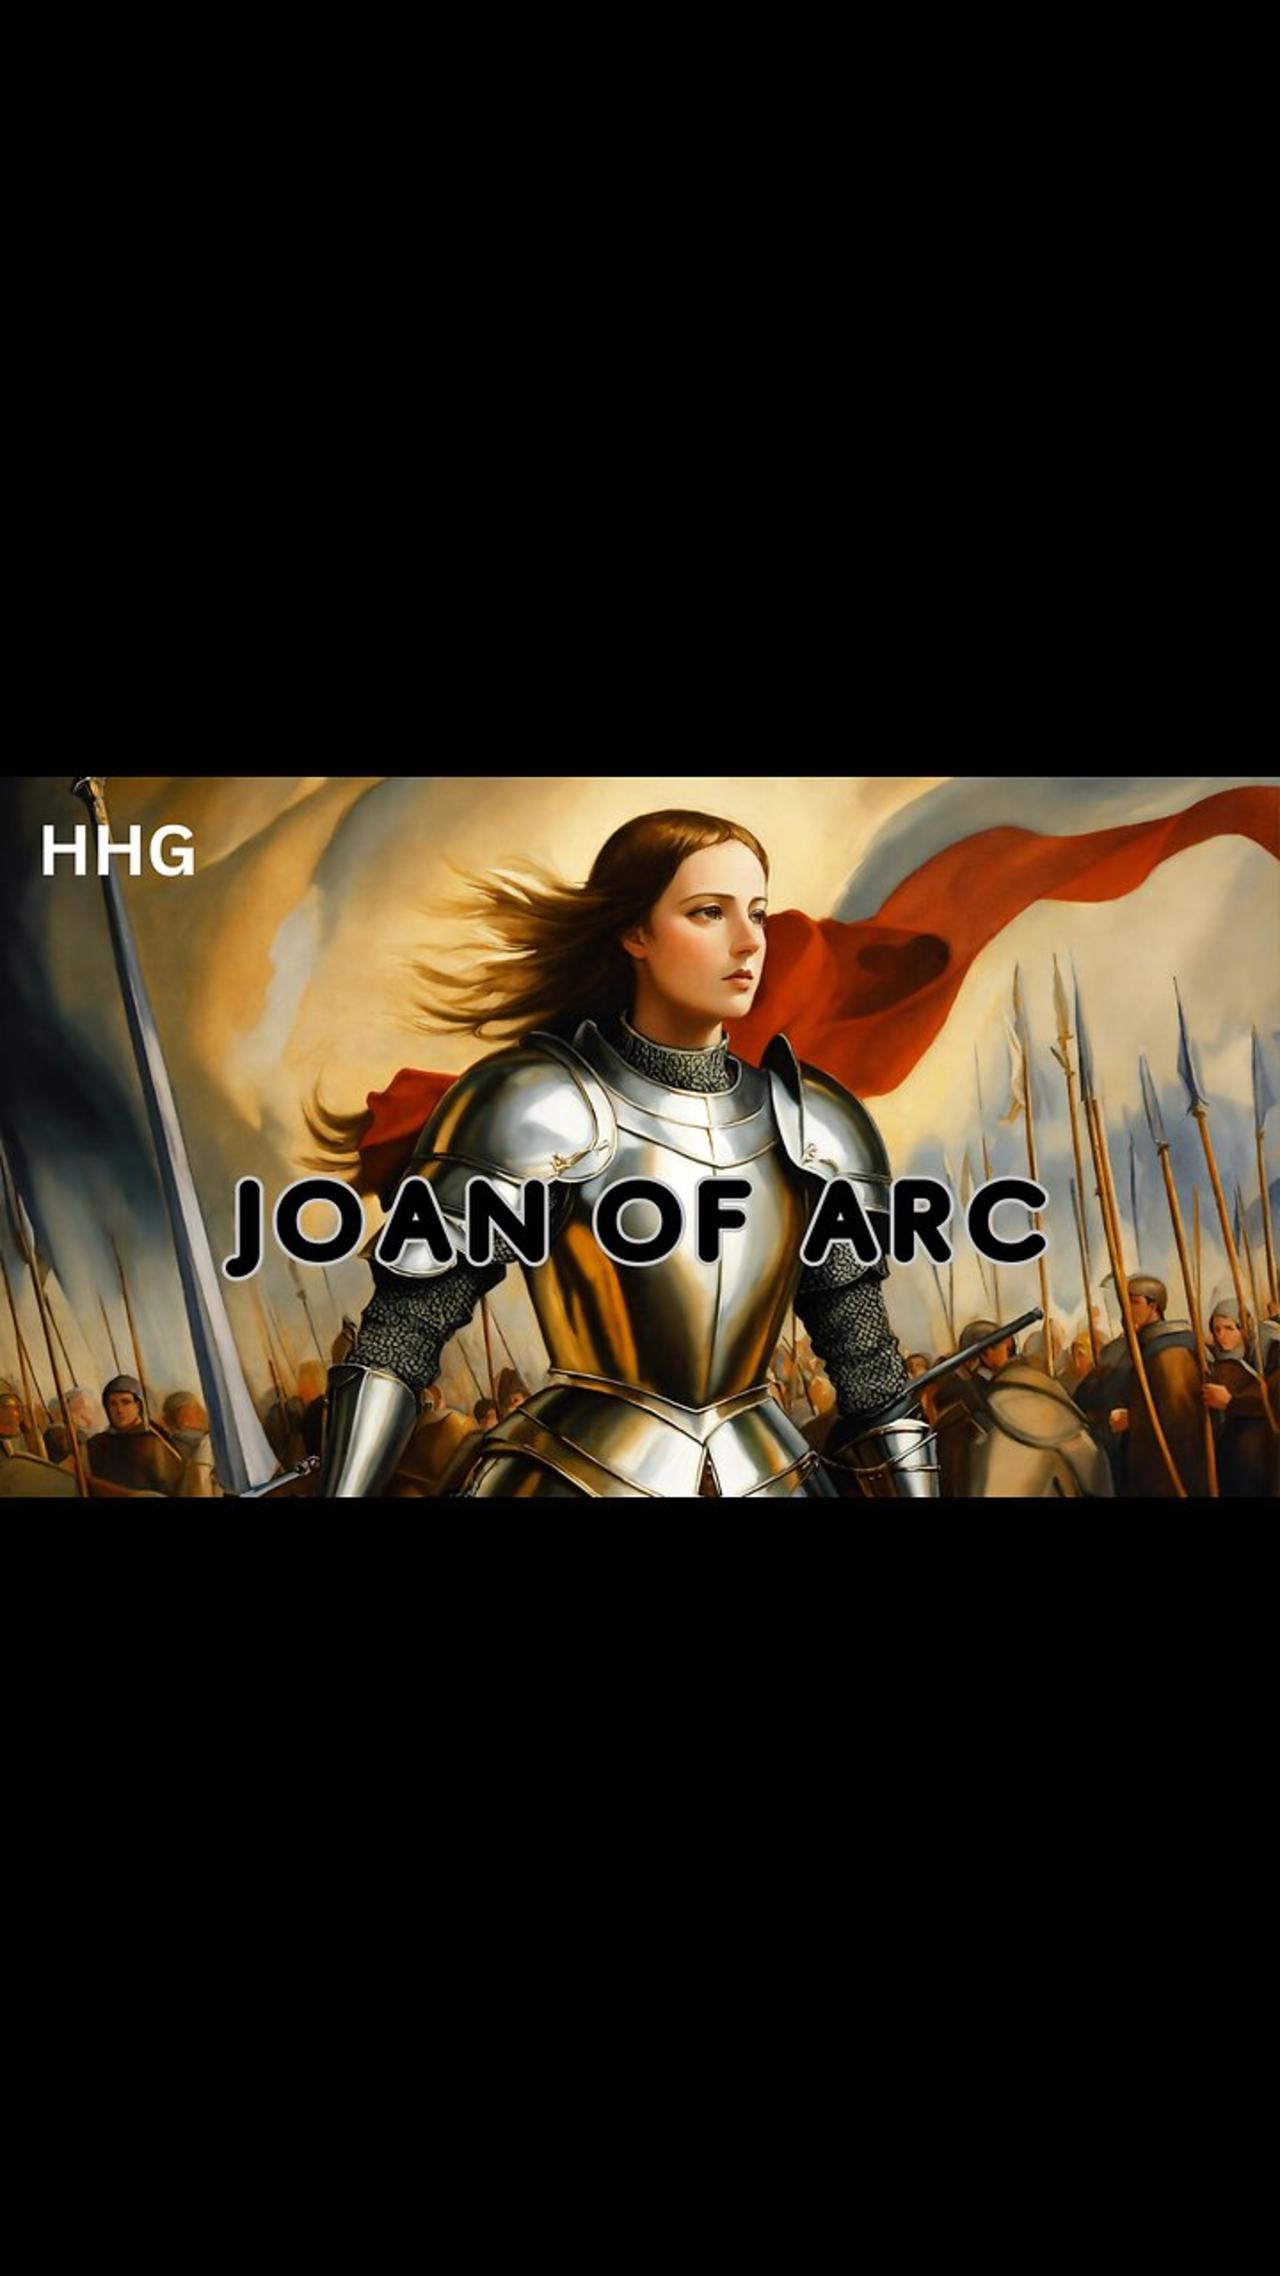 LEGENDARY STORY OF JOAN OF ARC.